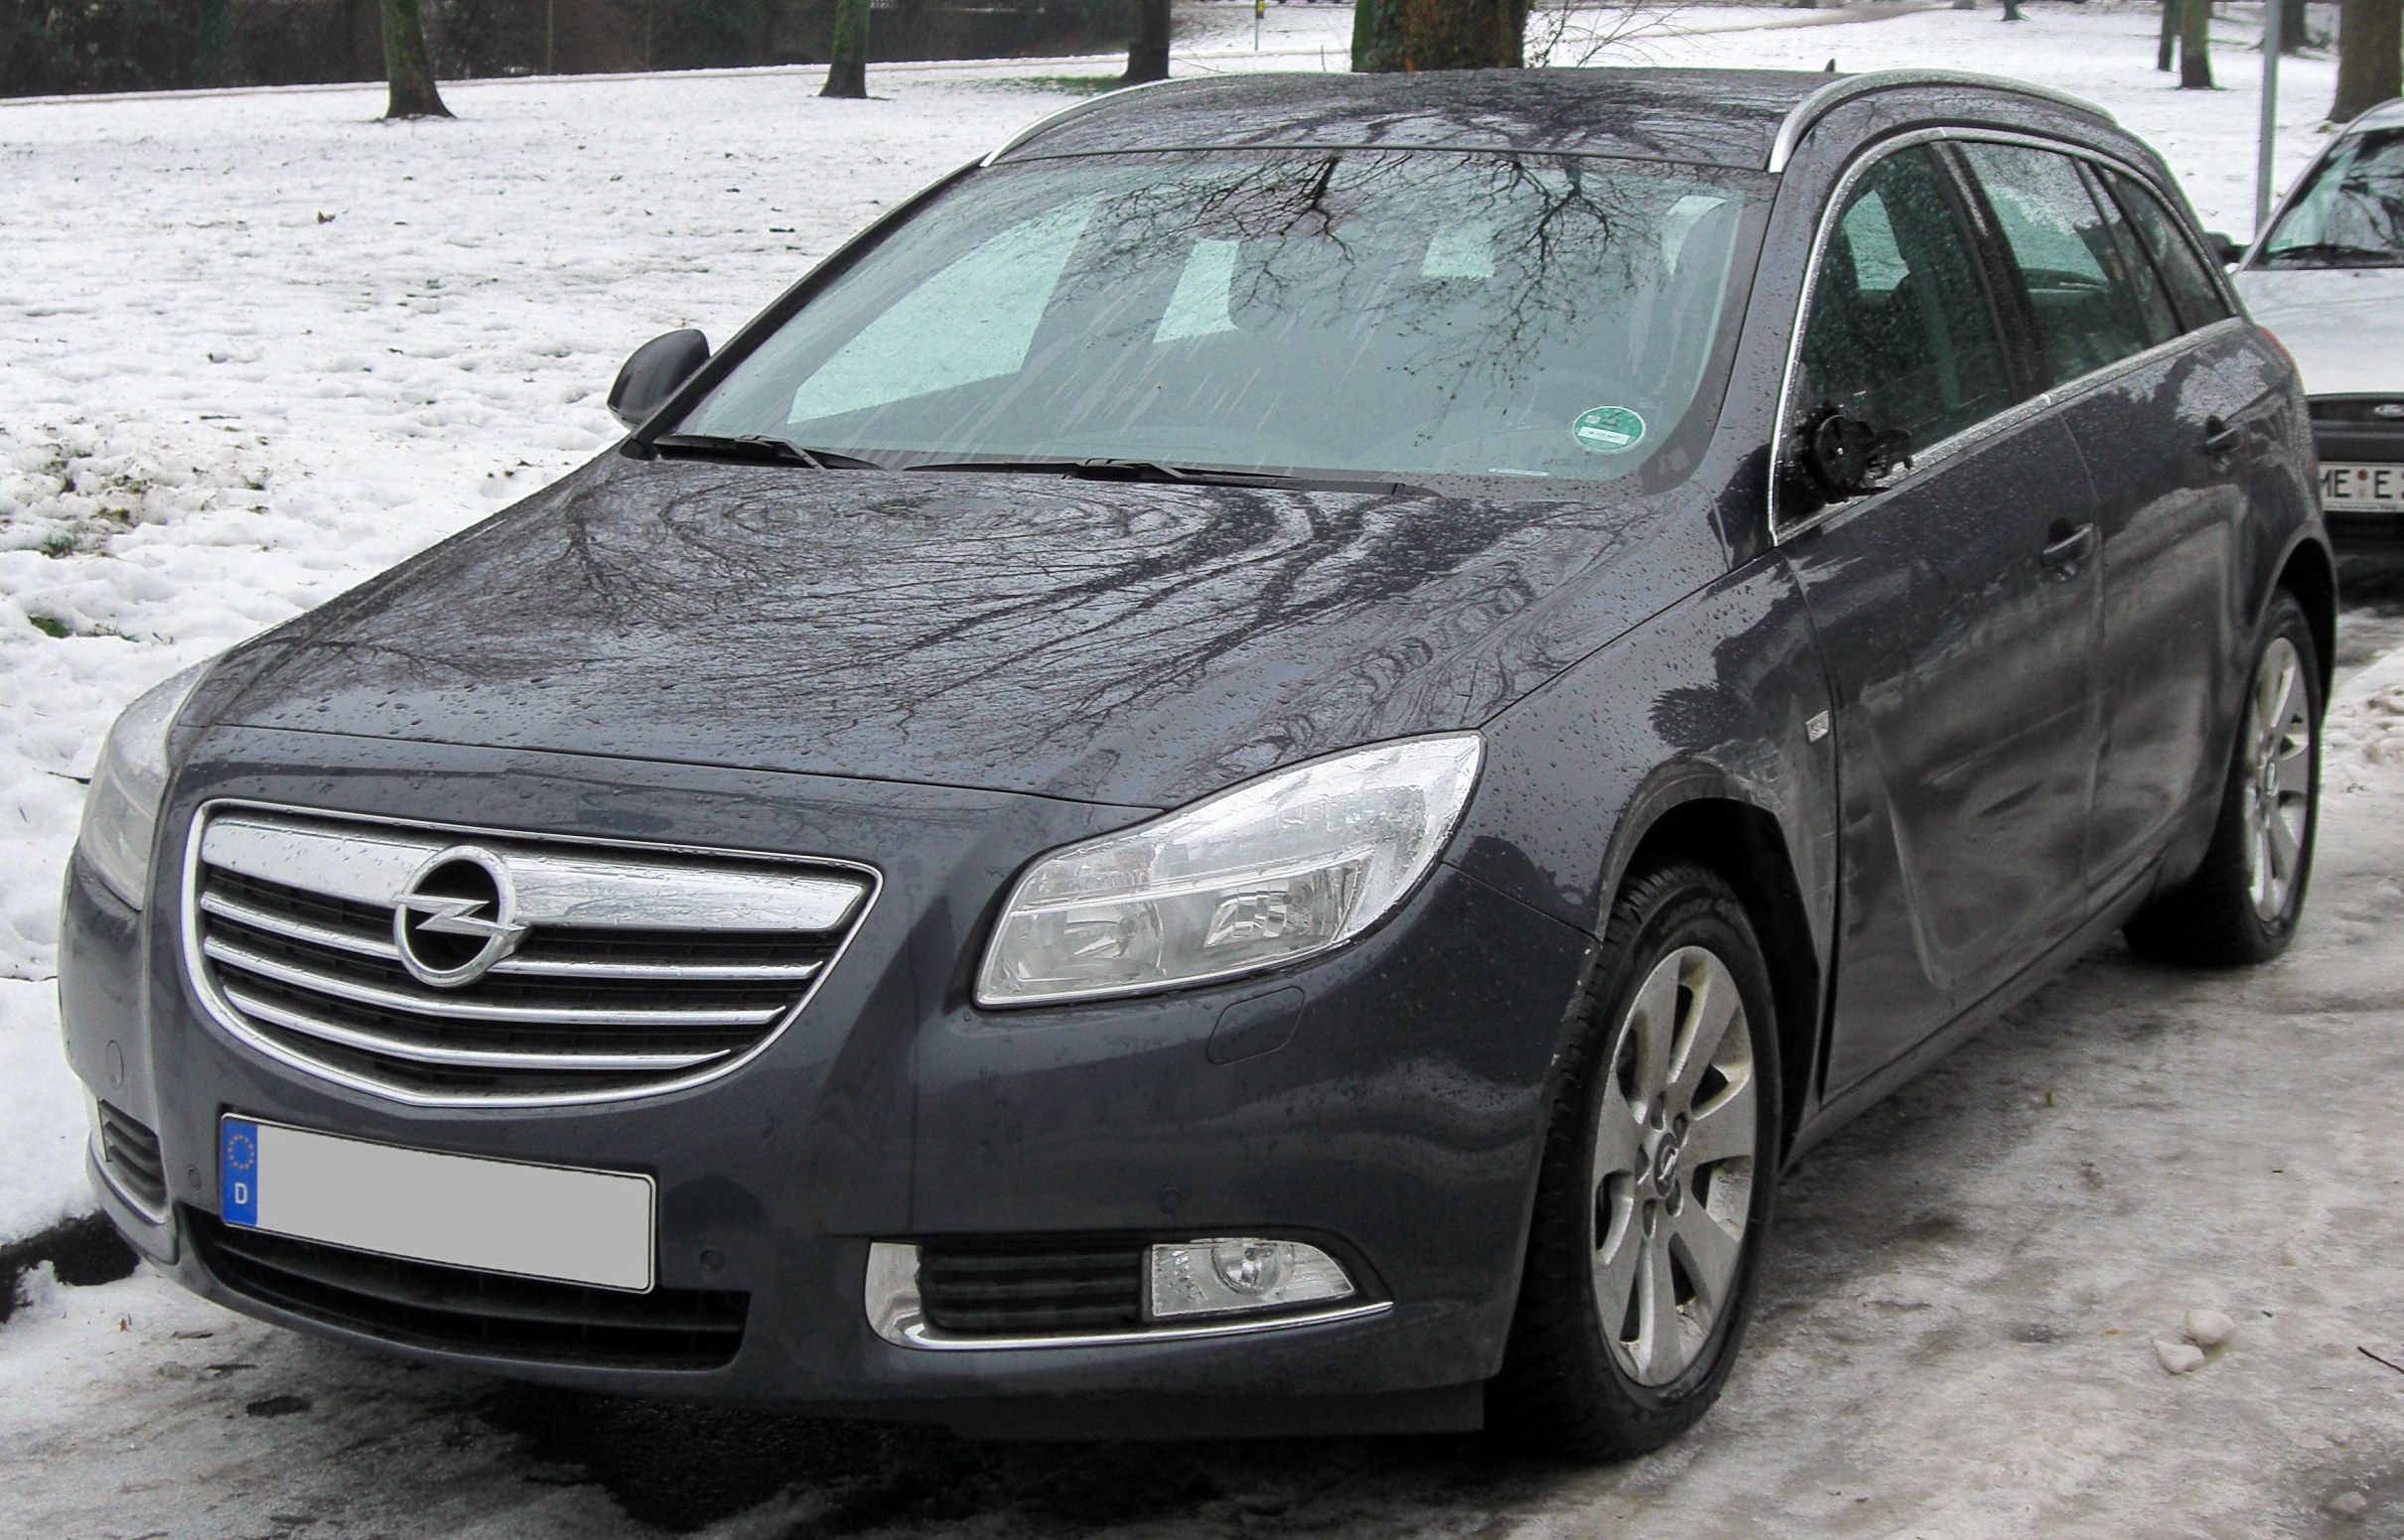 File:Opel Insignia Sports Tourer front 20100117.jpg - Wikipedia